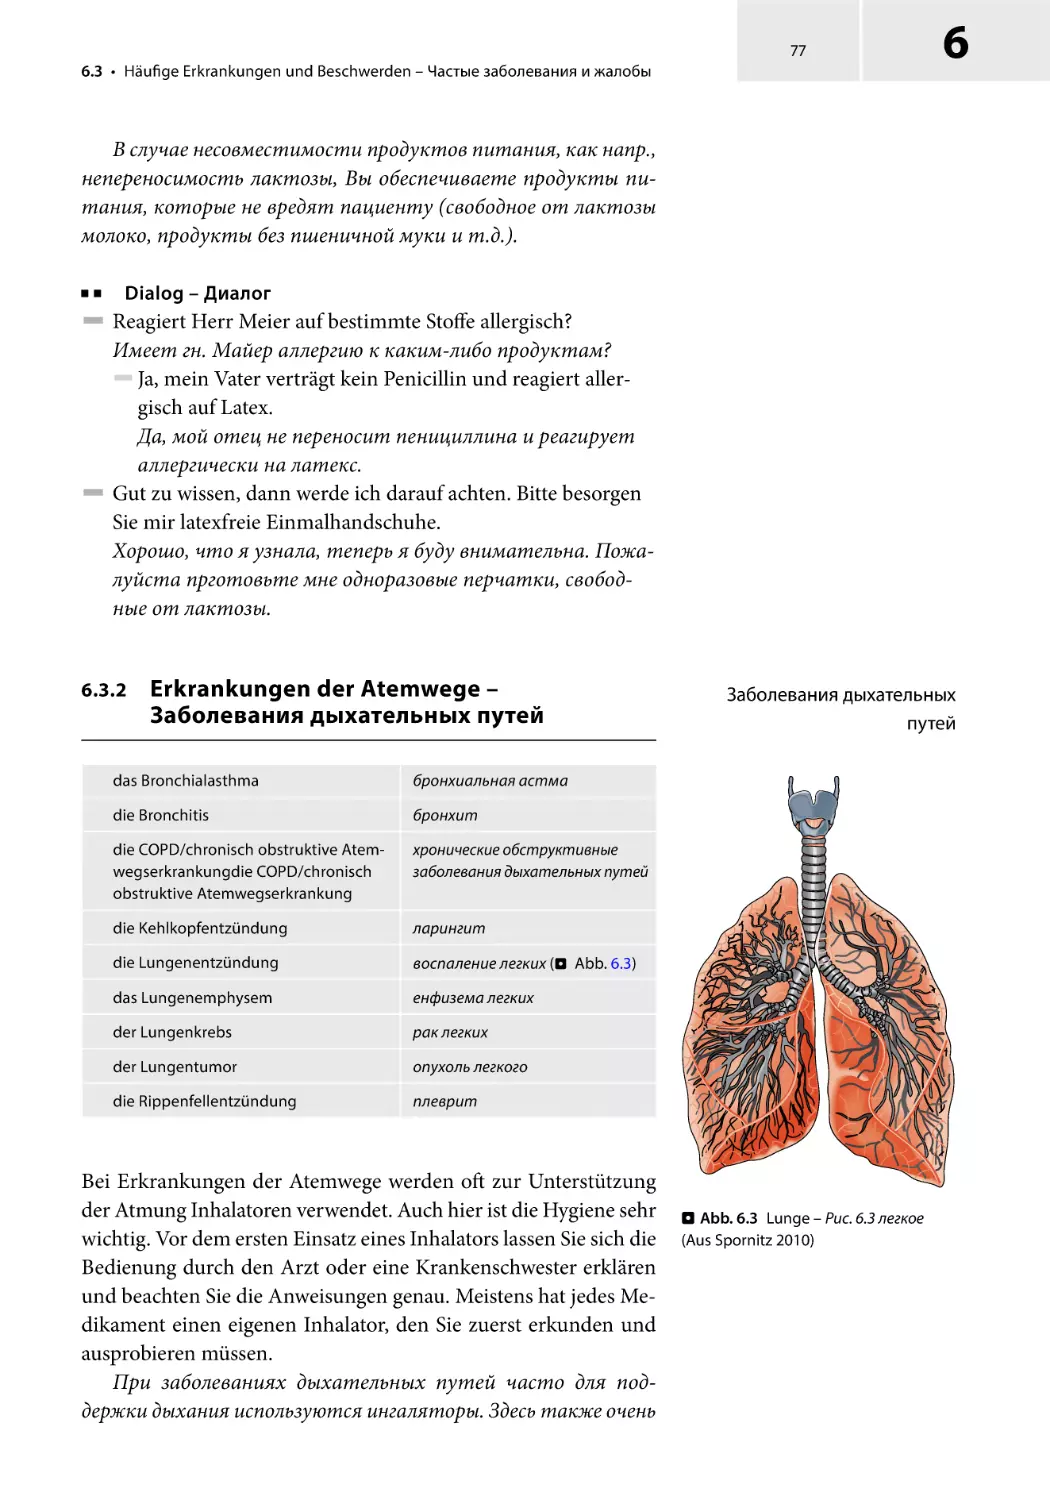 6.3.2 Erkrankungen der Atemwege – Заболевания дыхательных путей